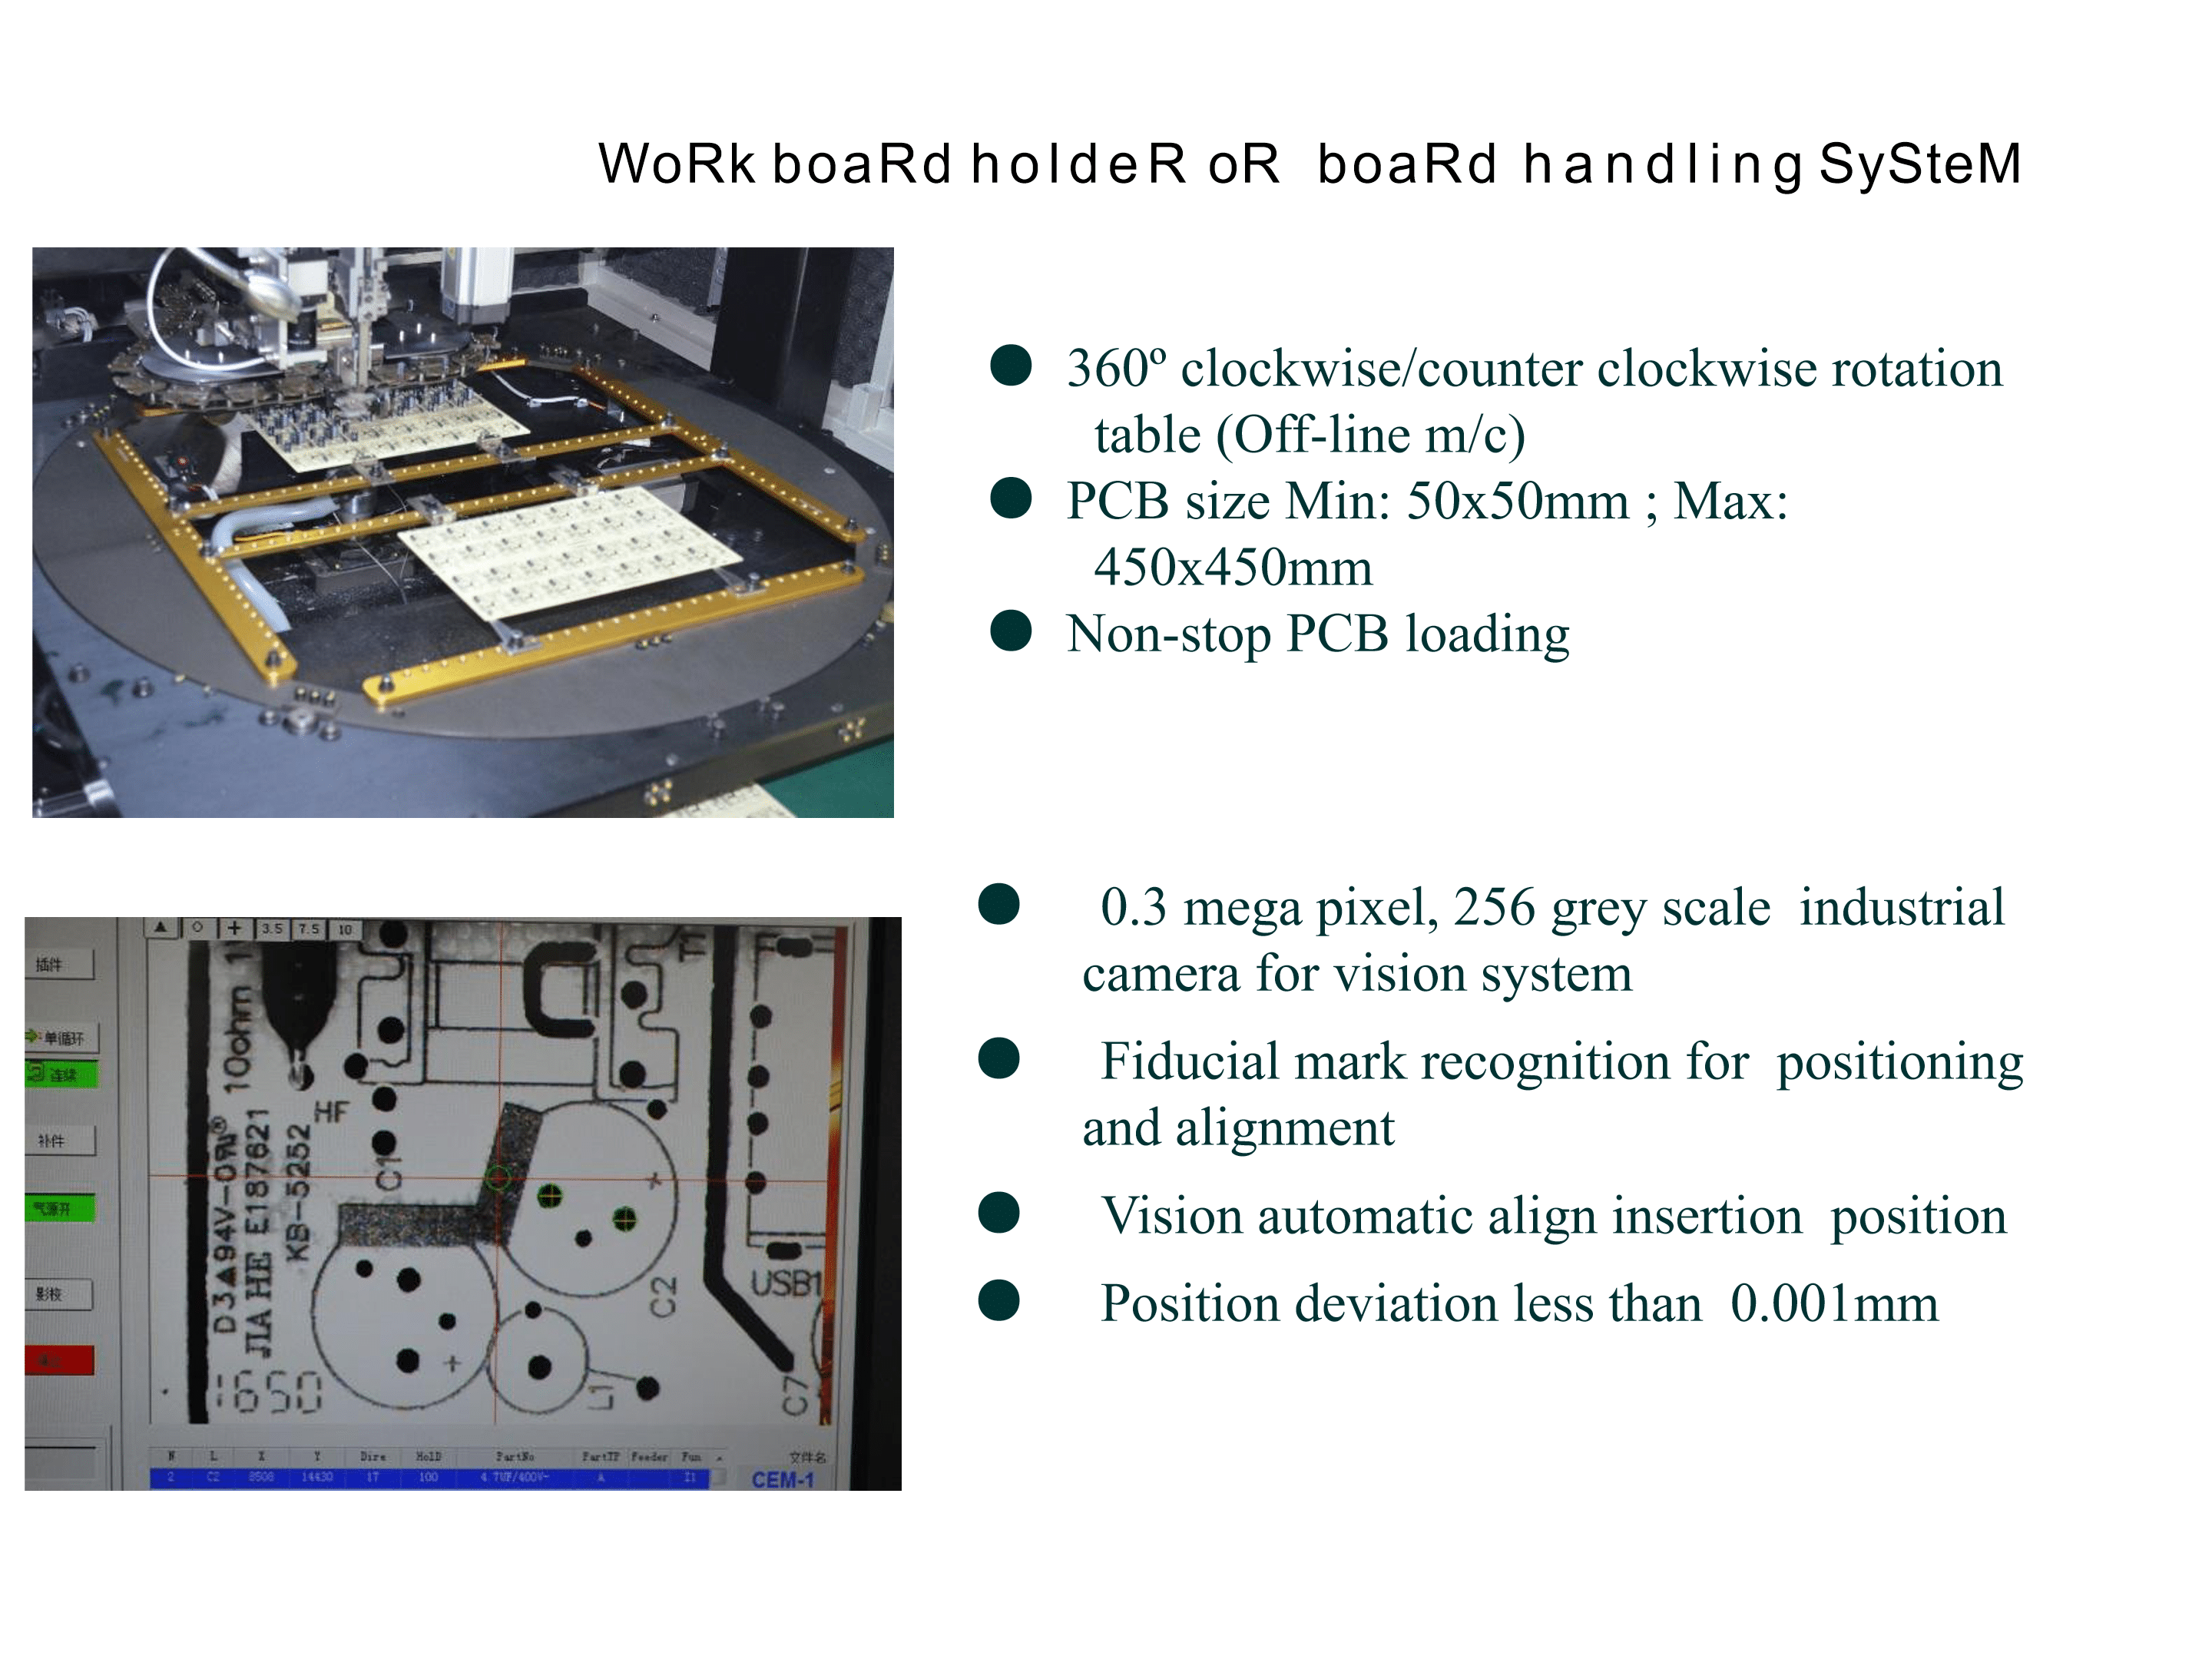 S-3010 Radial Insertion machine